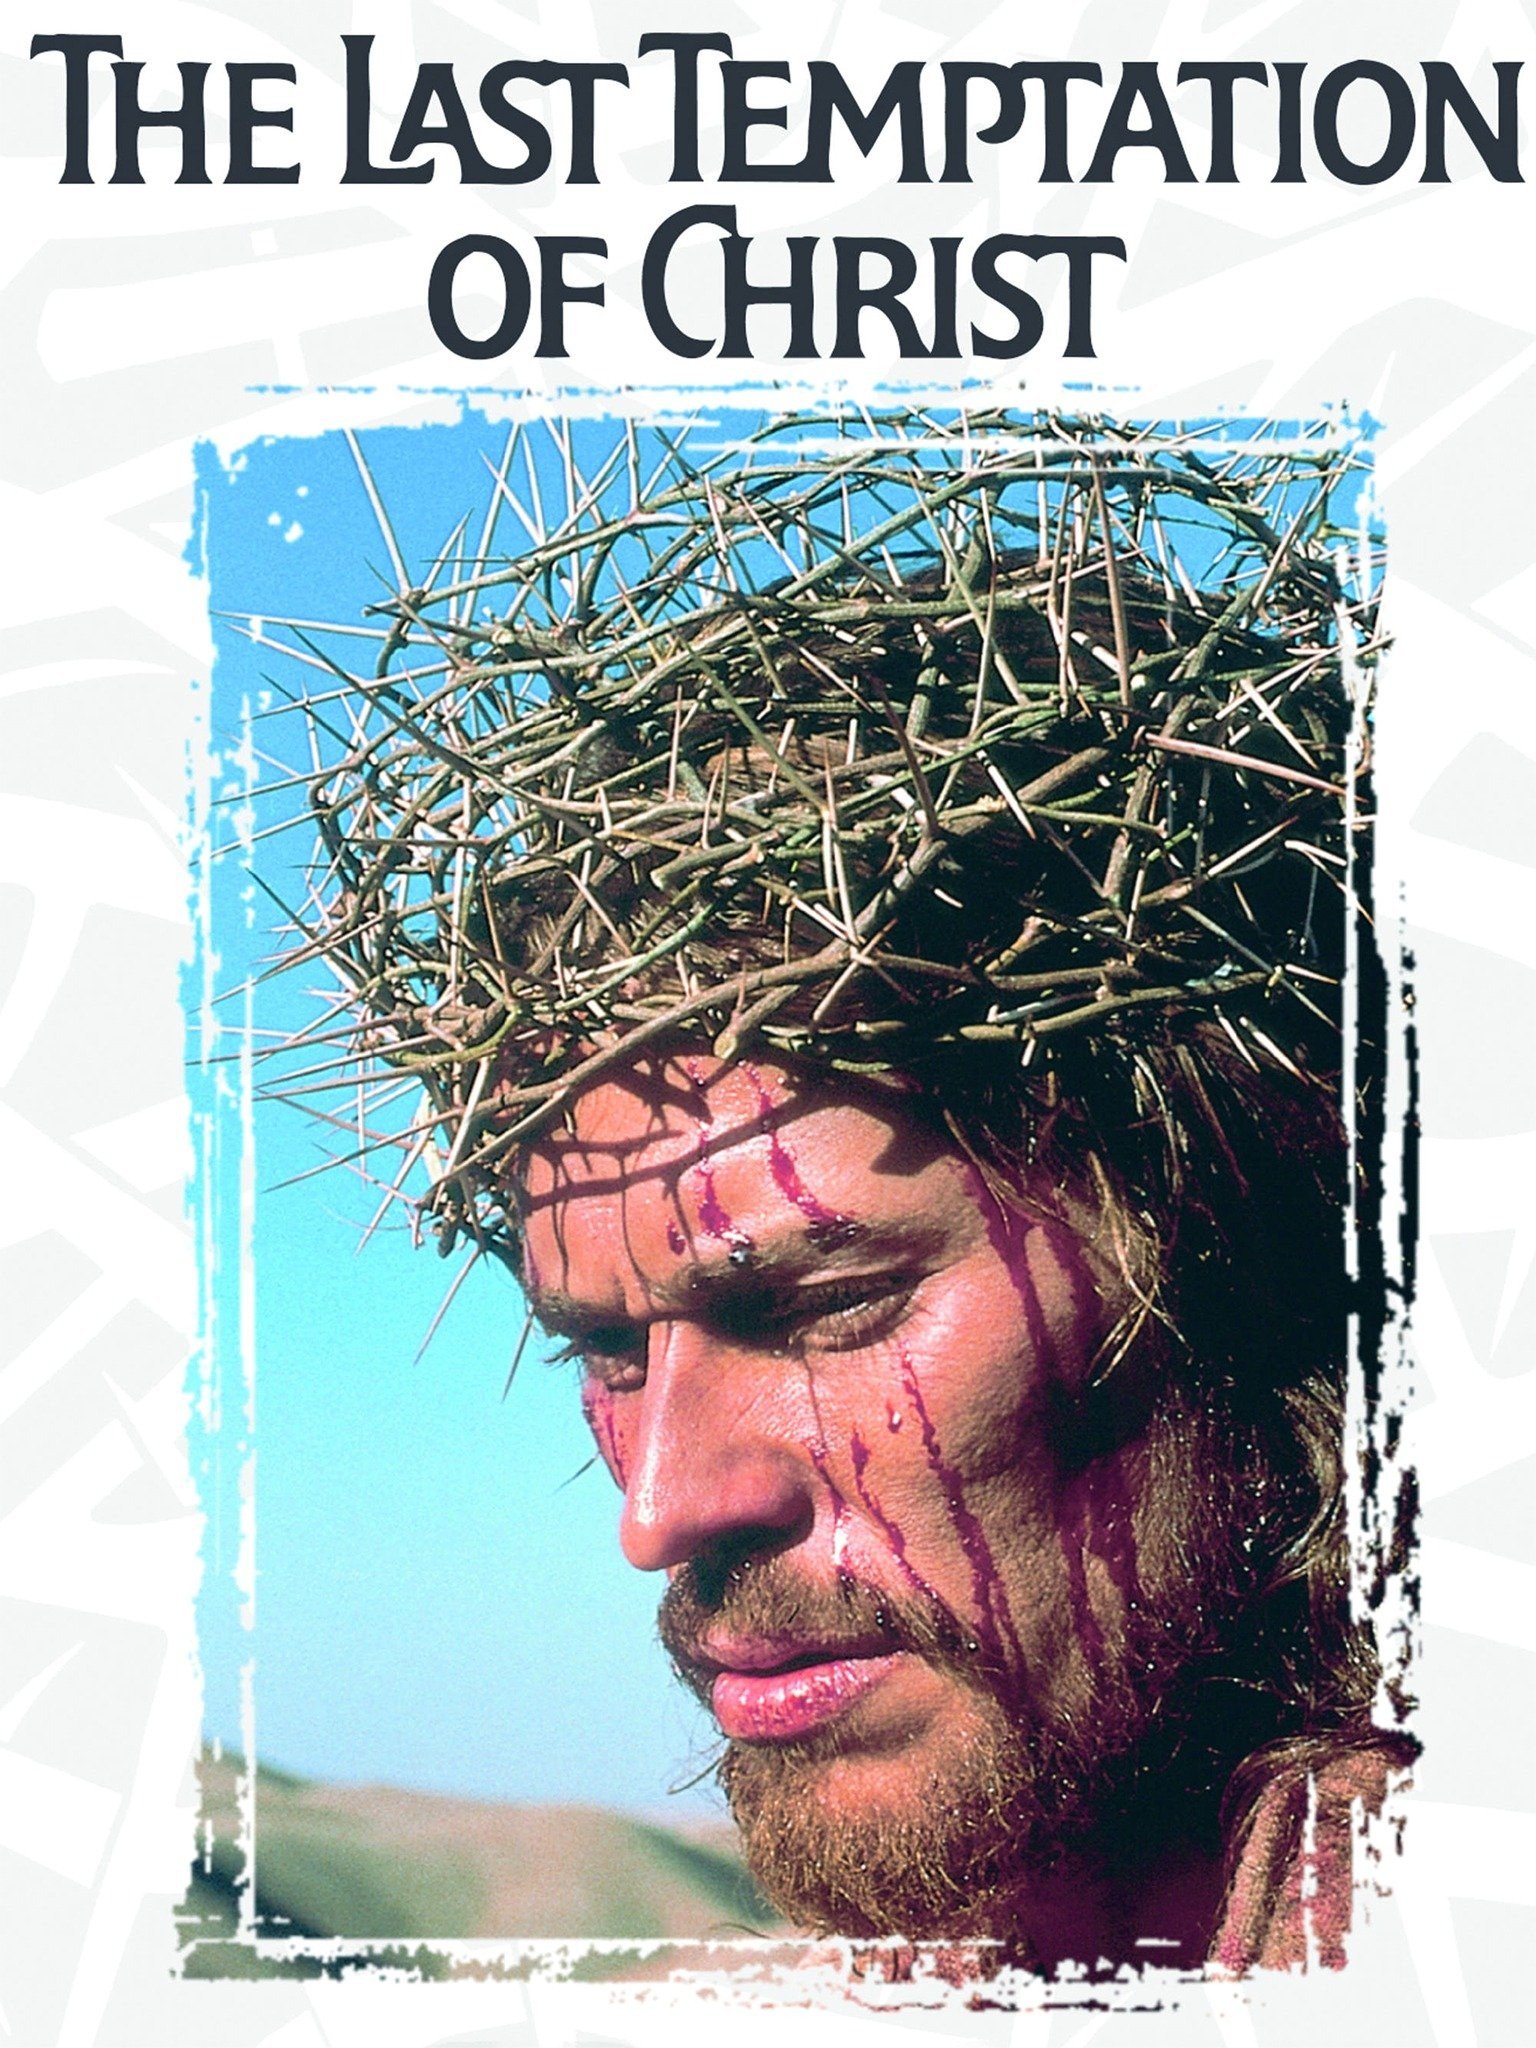 Last Temptation of Christ Poster.jpg